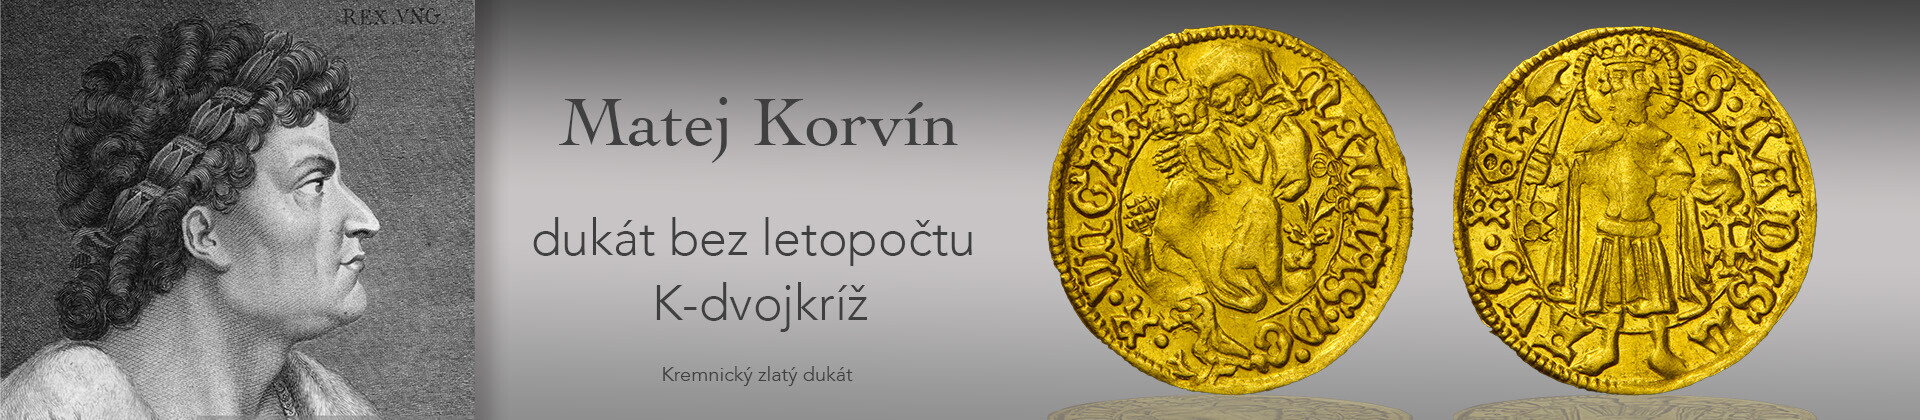 Matej Korvín - kremnický zlatý dukát K-dvojkríž